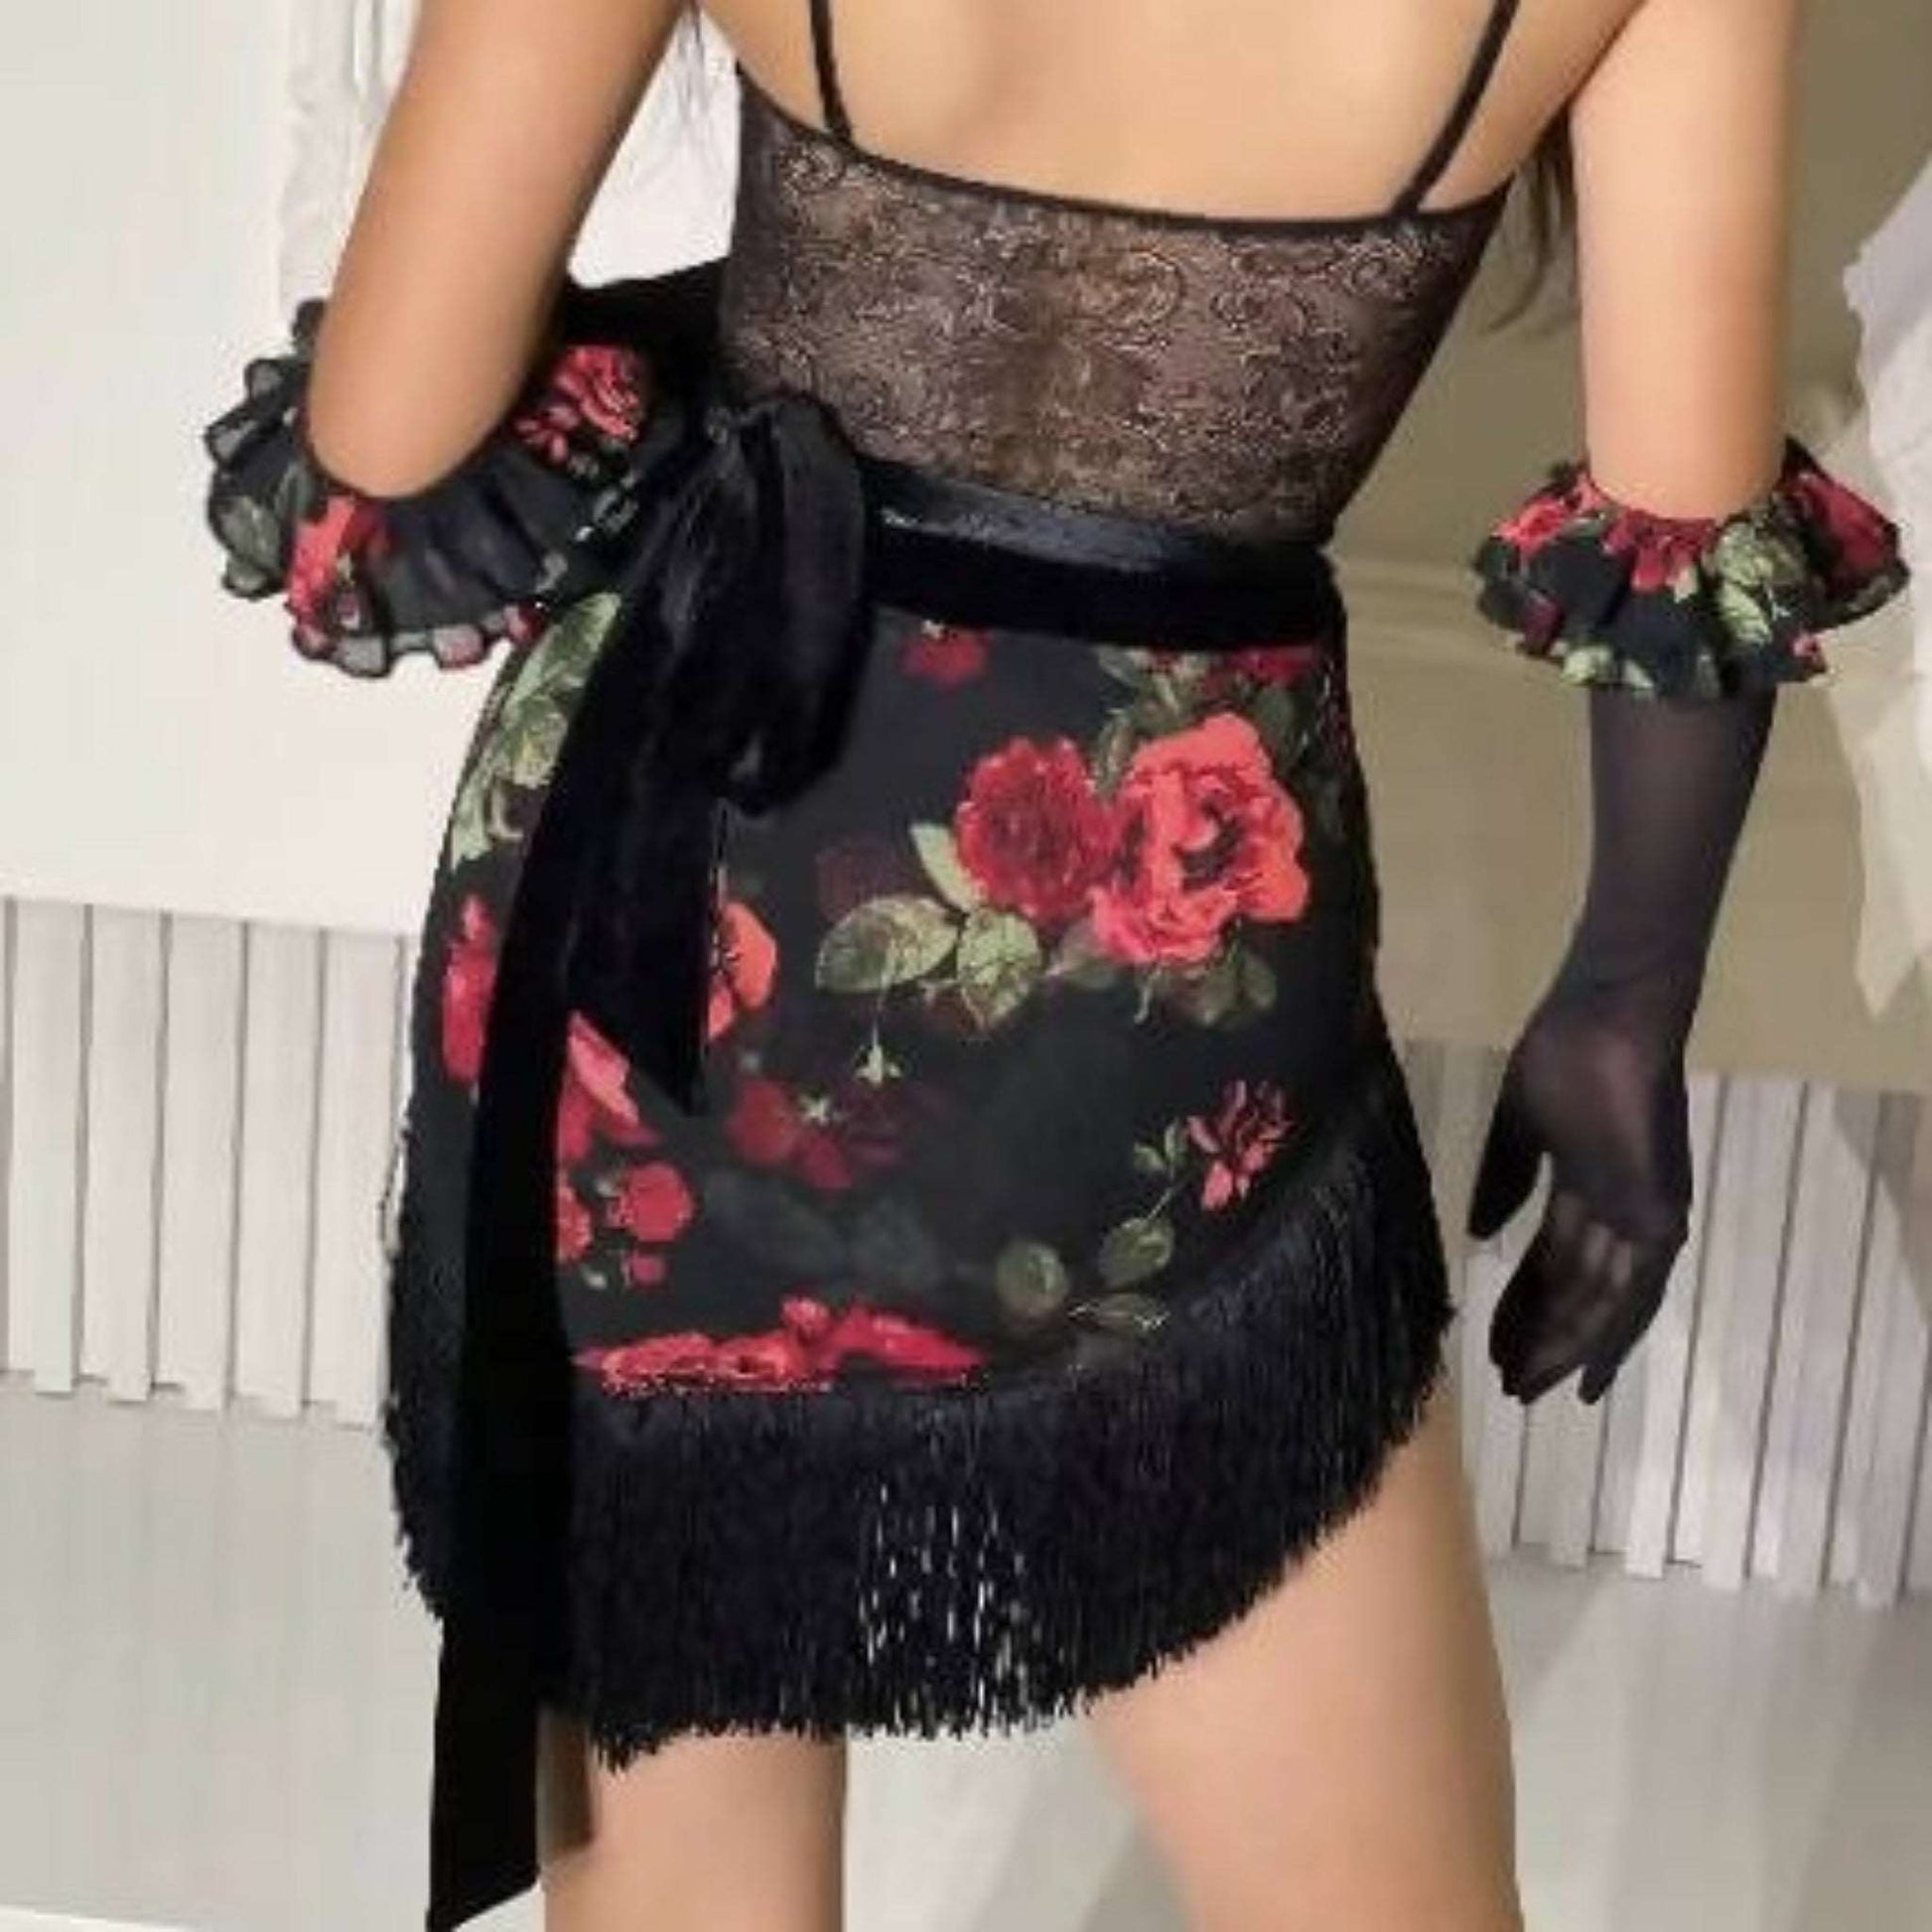 Floral Dance skirt